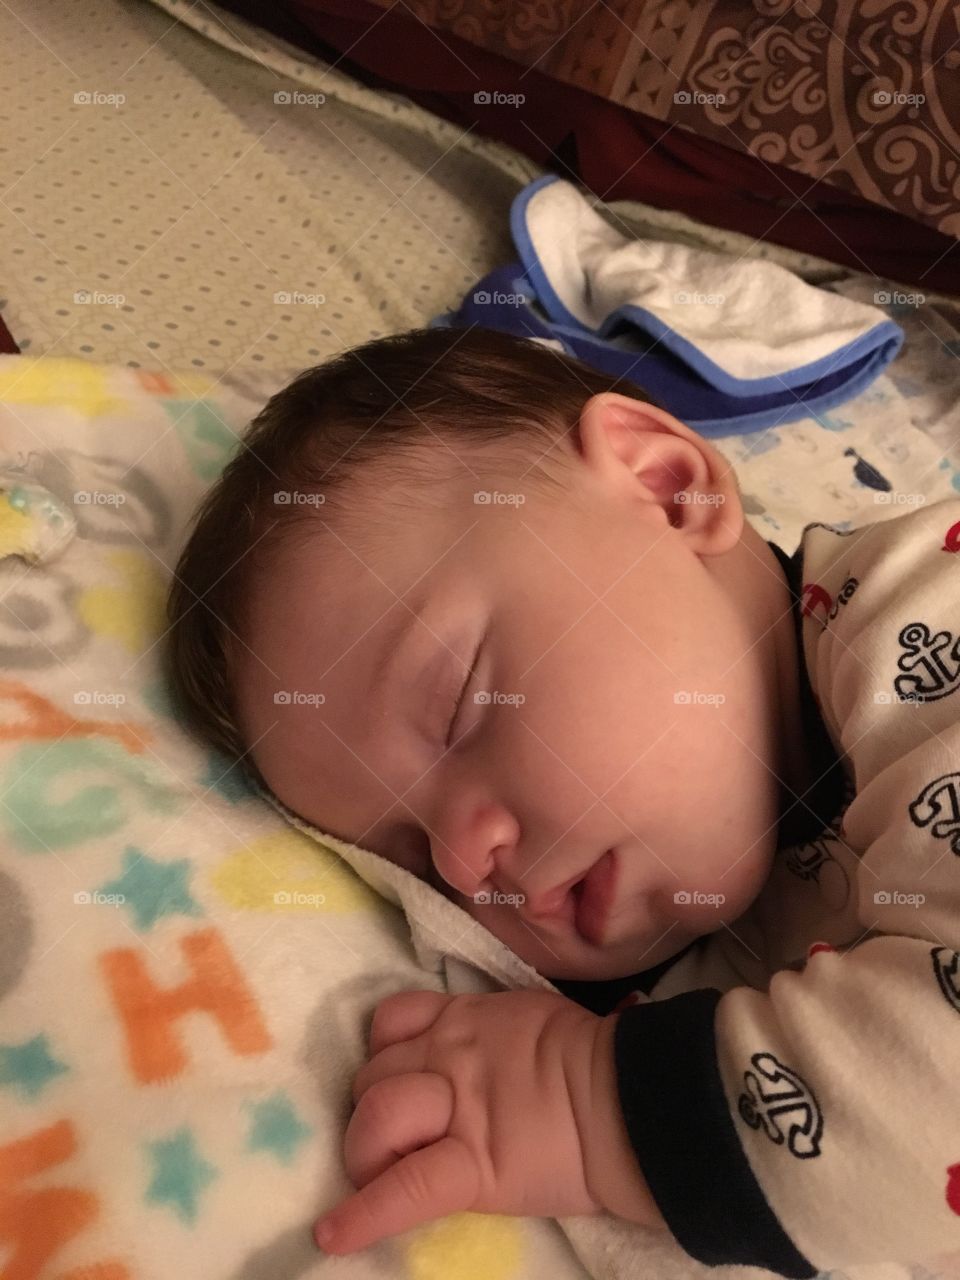 My grandson sleeping 💕💕💕